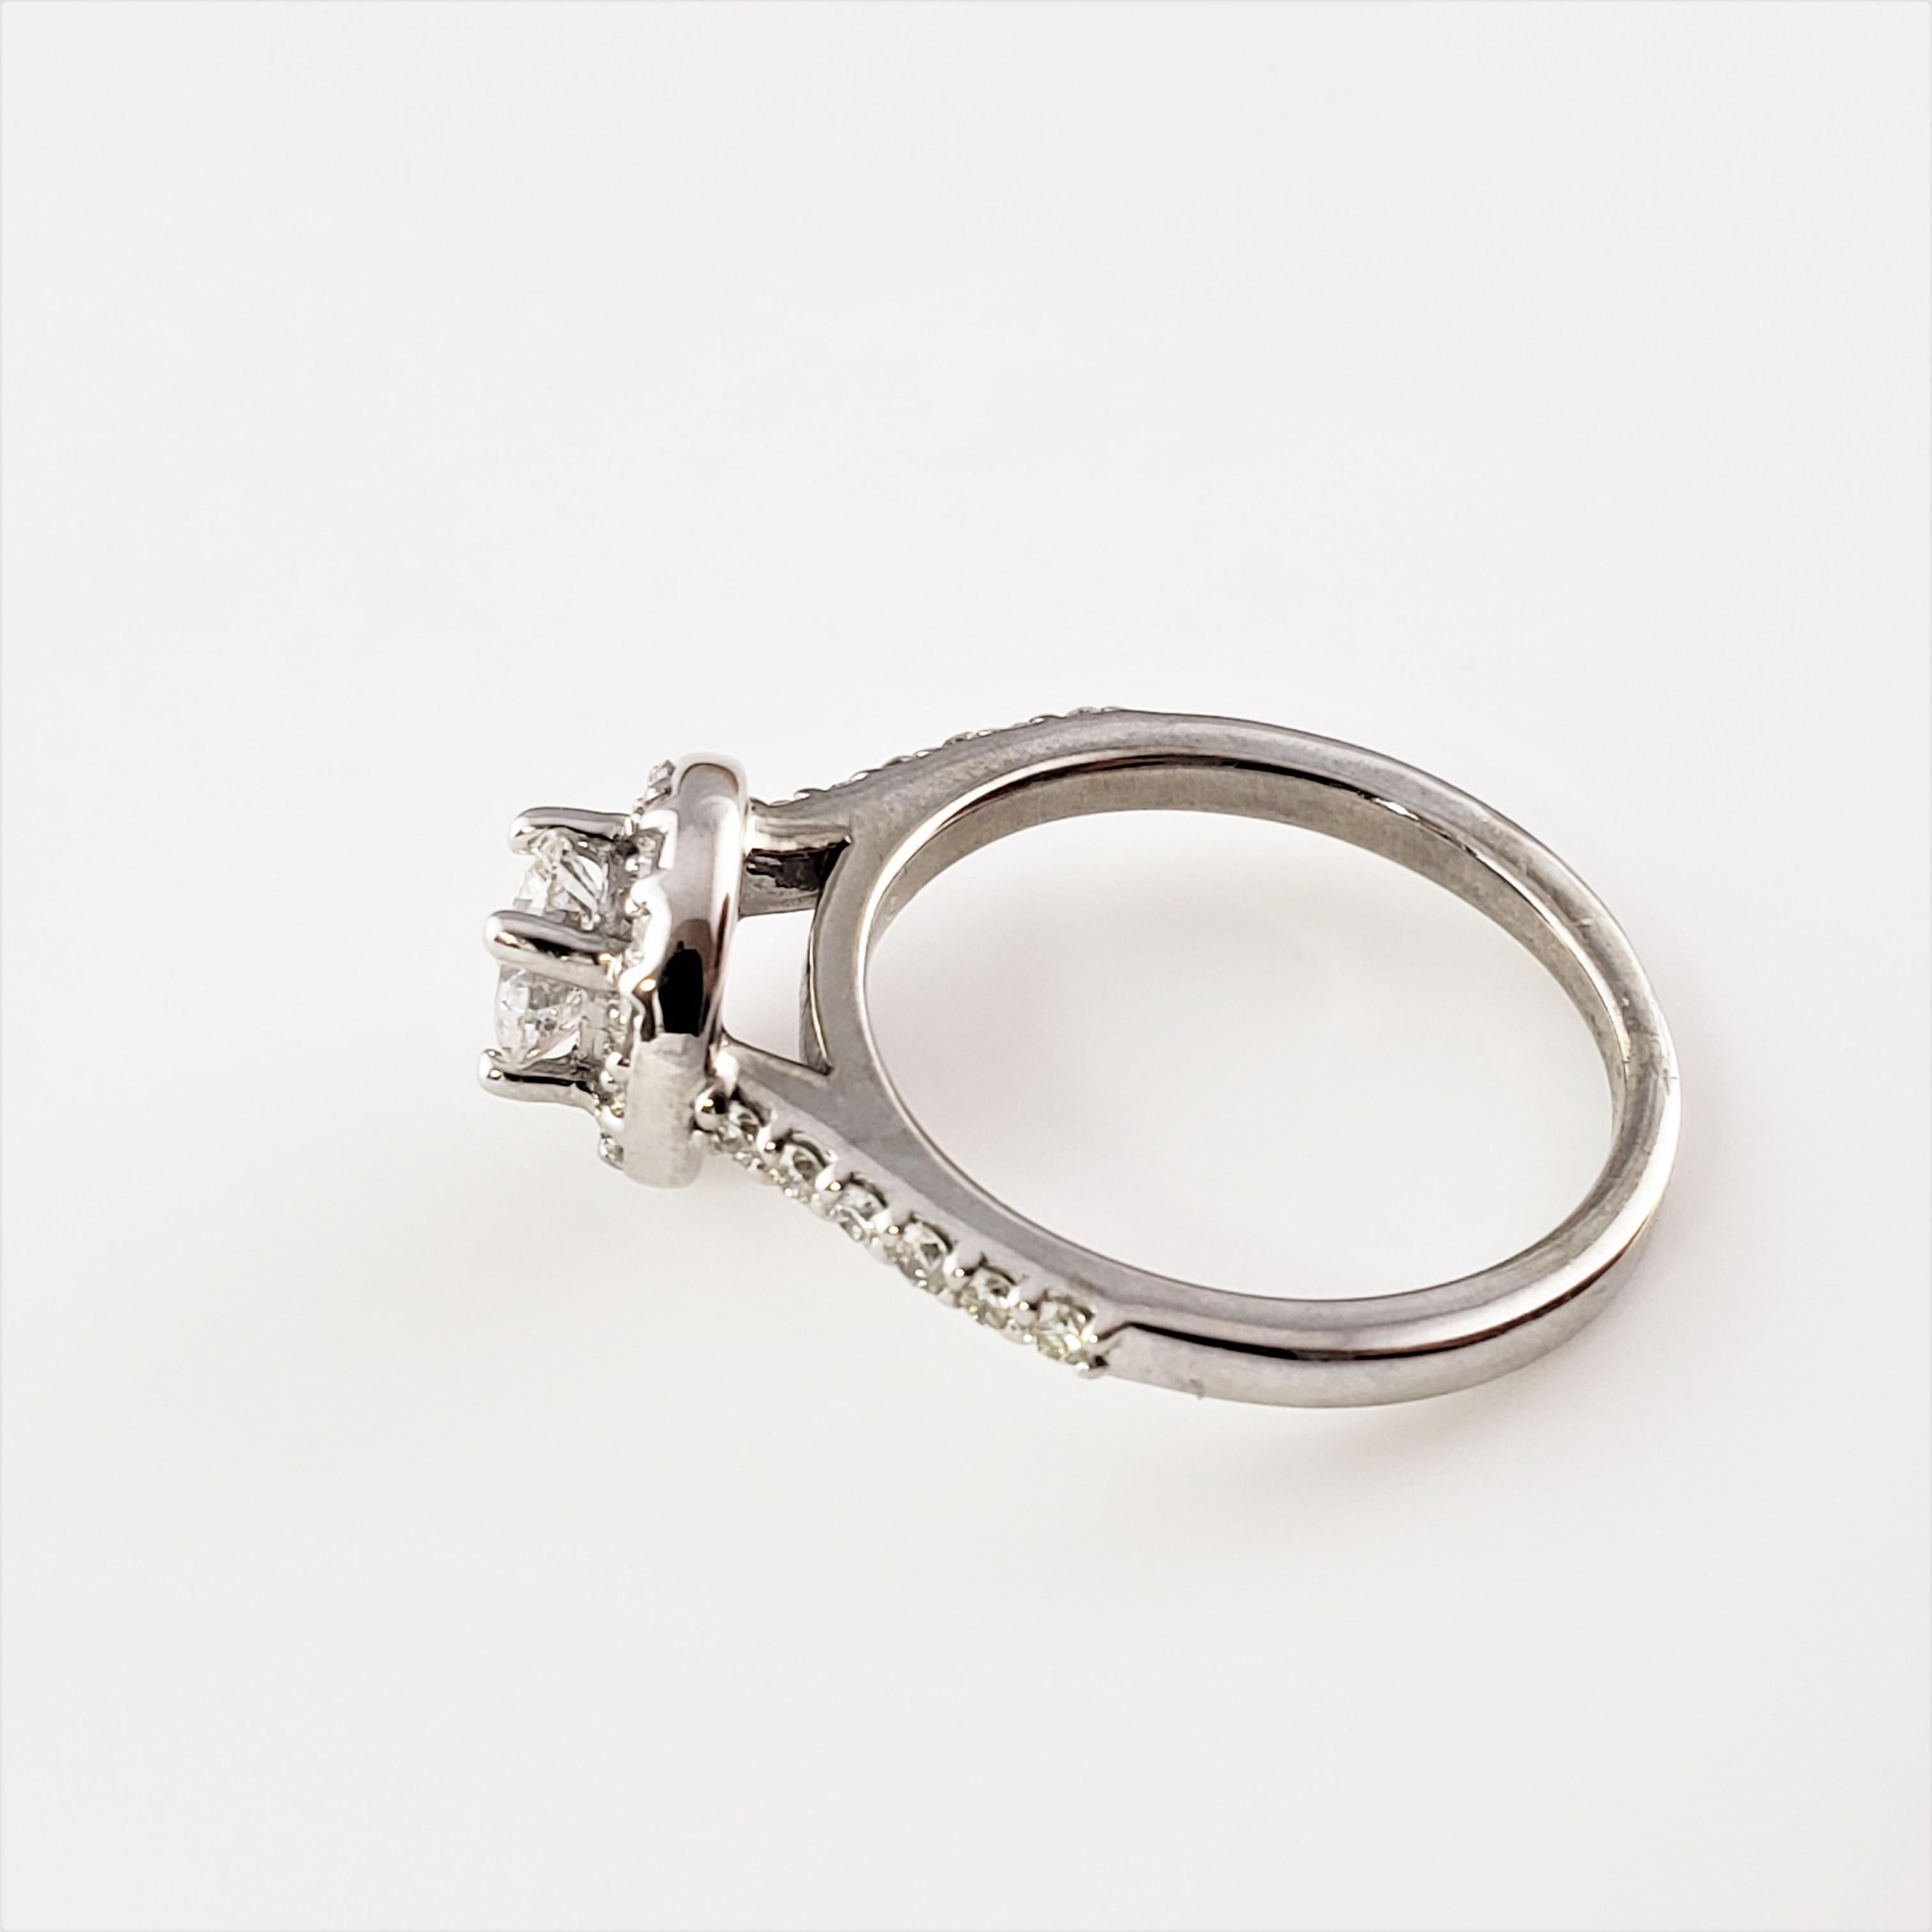 Brilliant Cut 14 Karat White Gold Diamond Engagement Ring